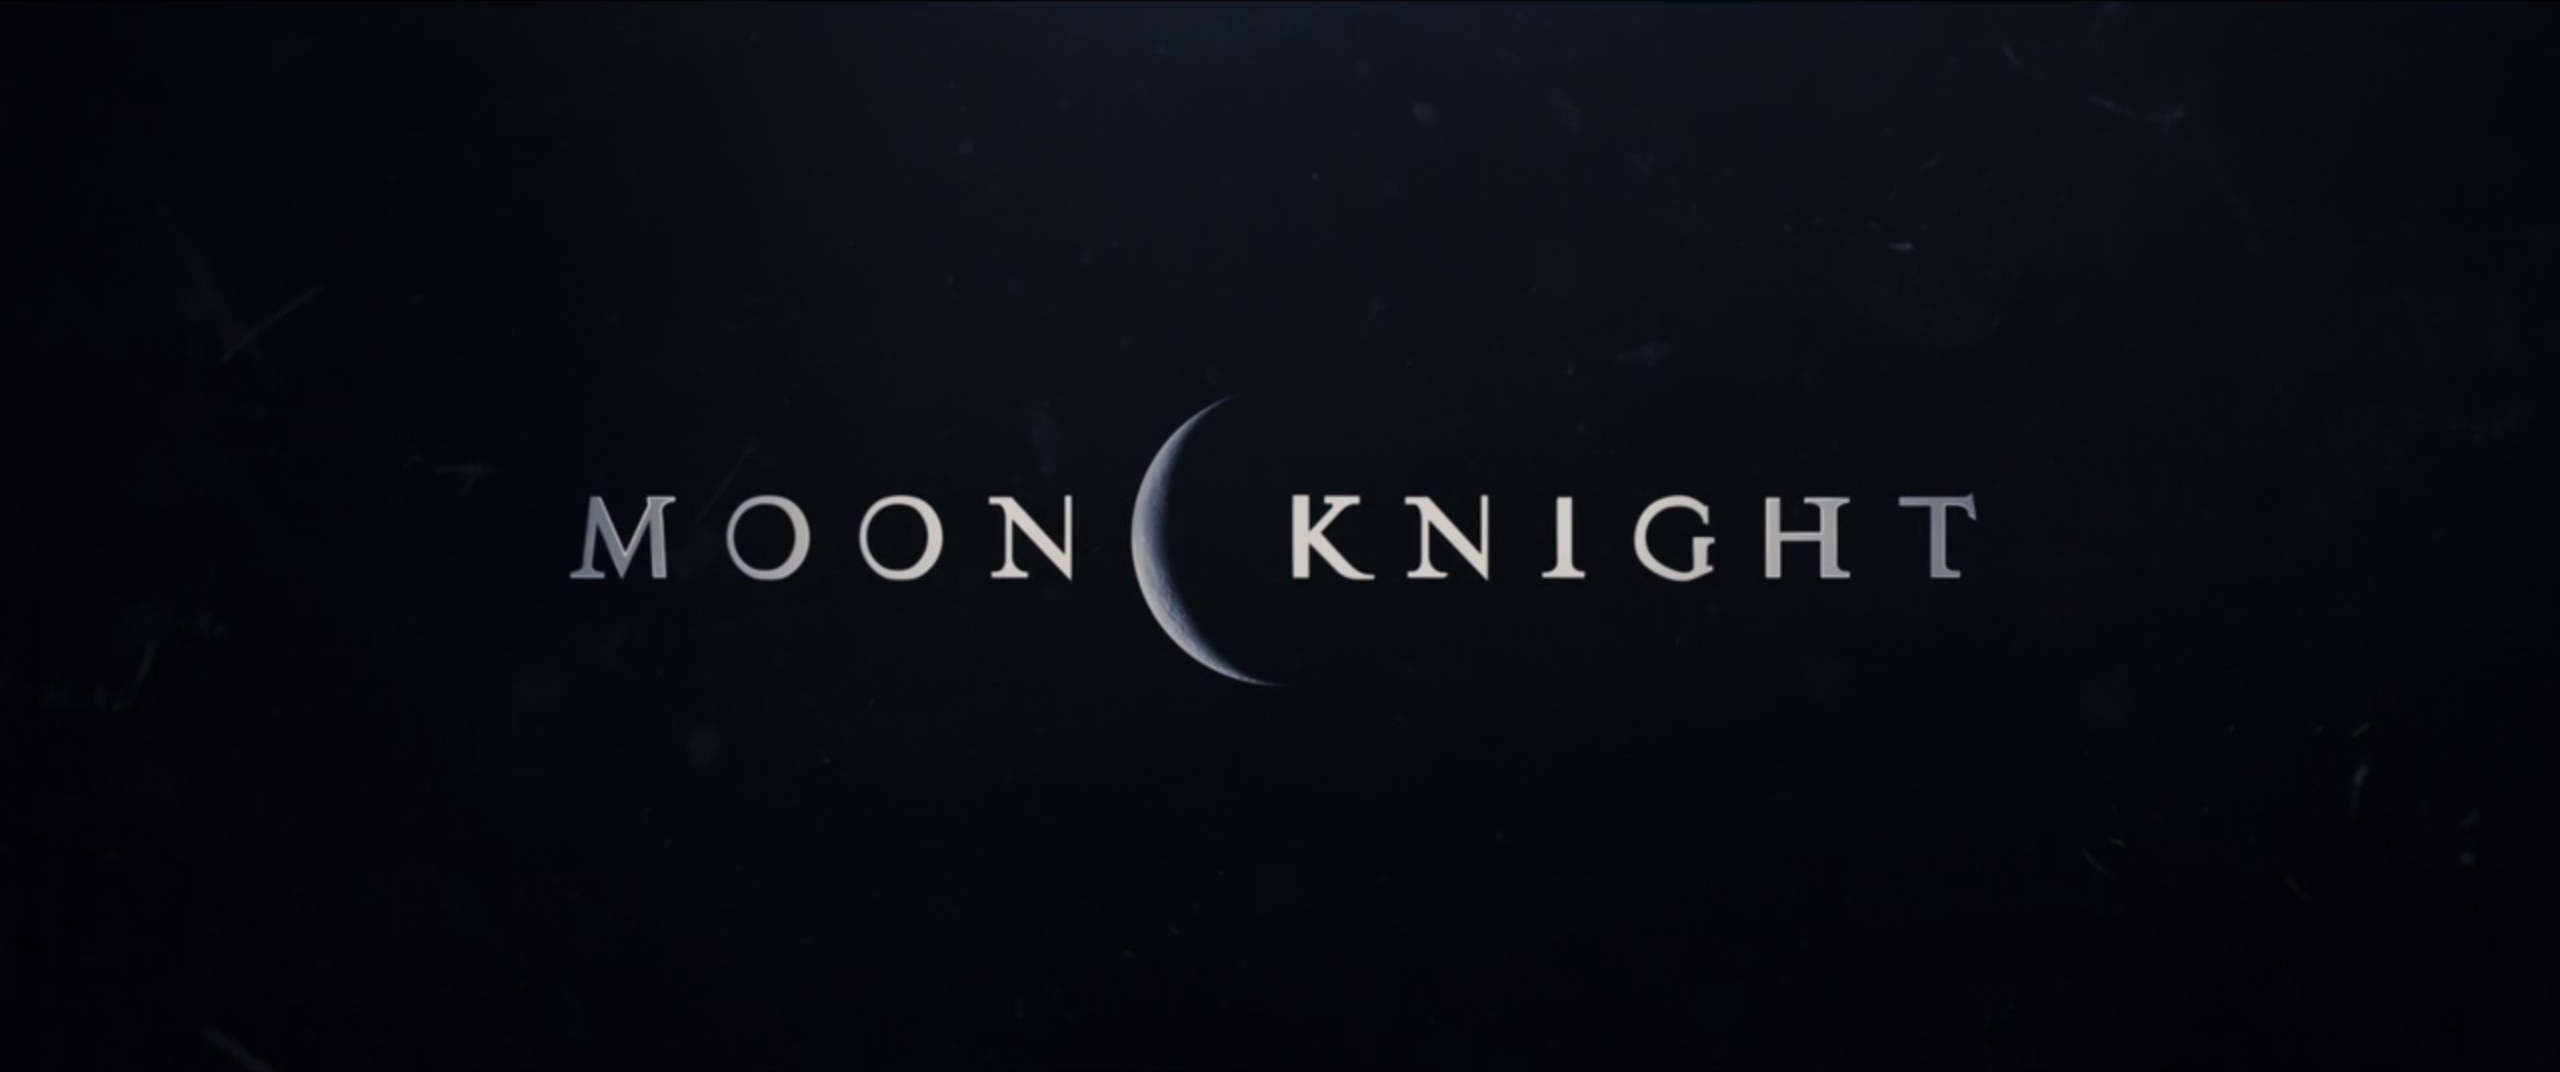 MOON KNIGHT Trailer 2 (NEW, 2022) 